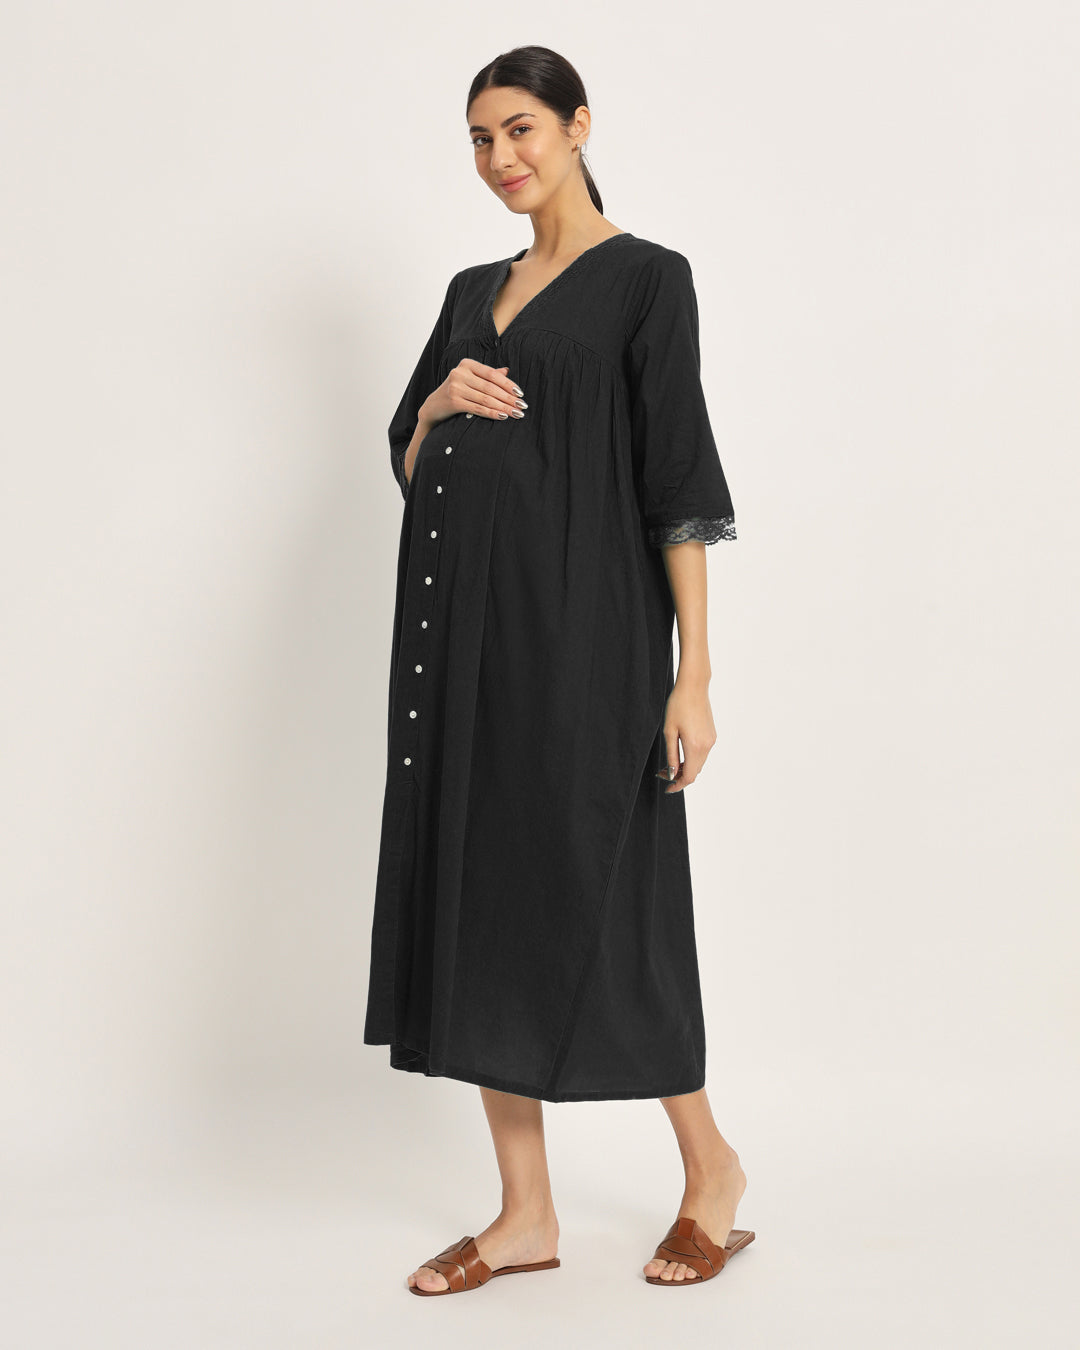 Combo: Black & Wisteria Purple Stylish Preggo Maternity & Nursing Dress - Set of 2